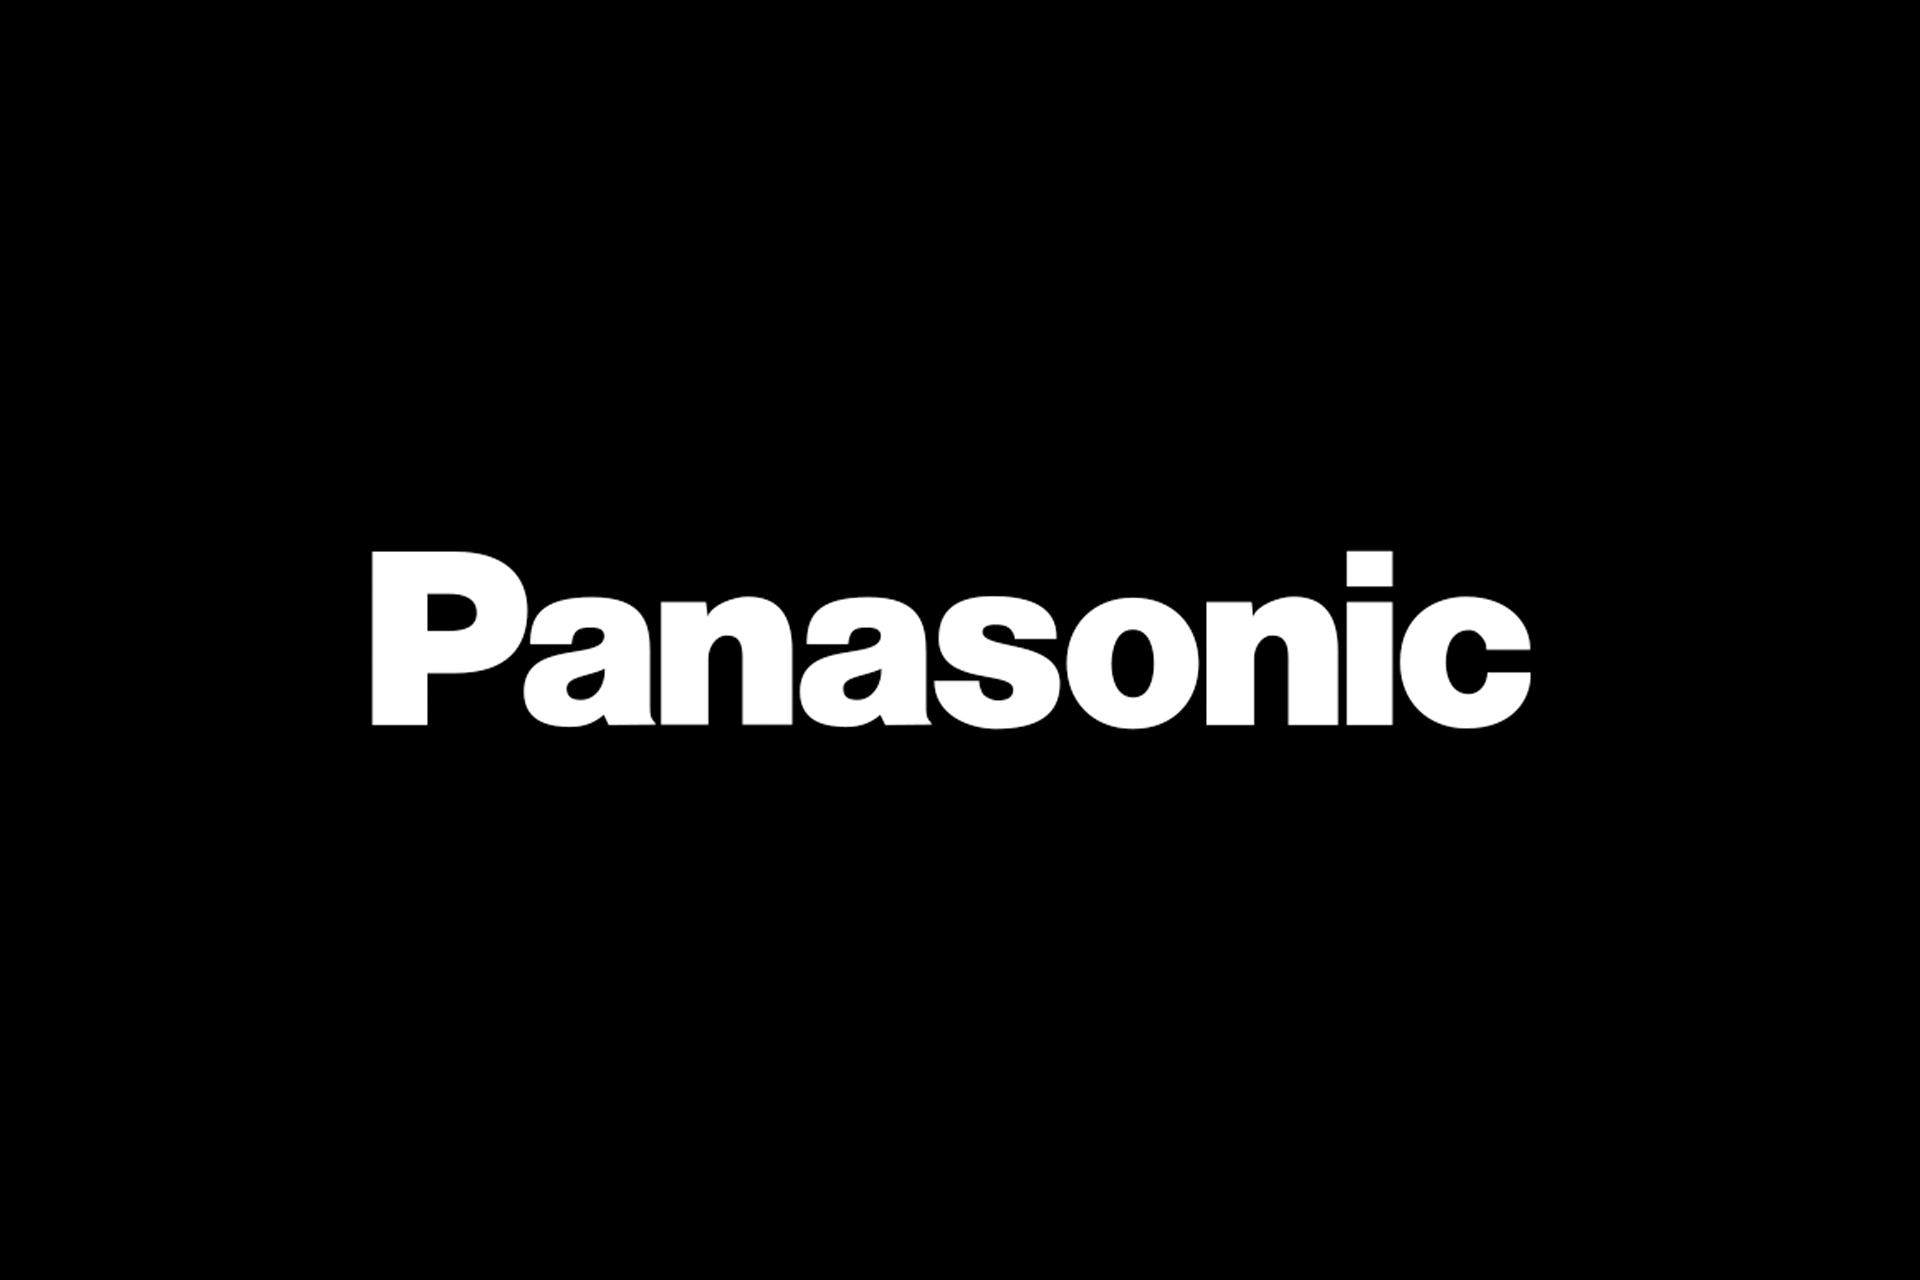 Panasonic logo on a black background